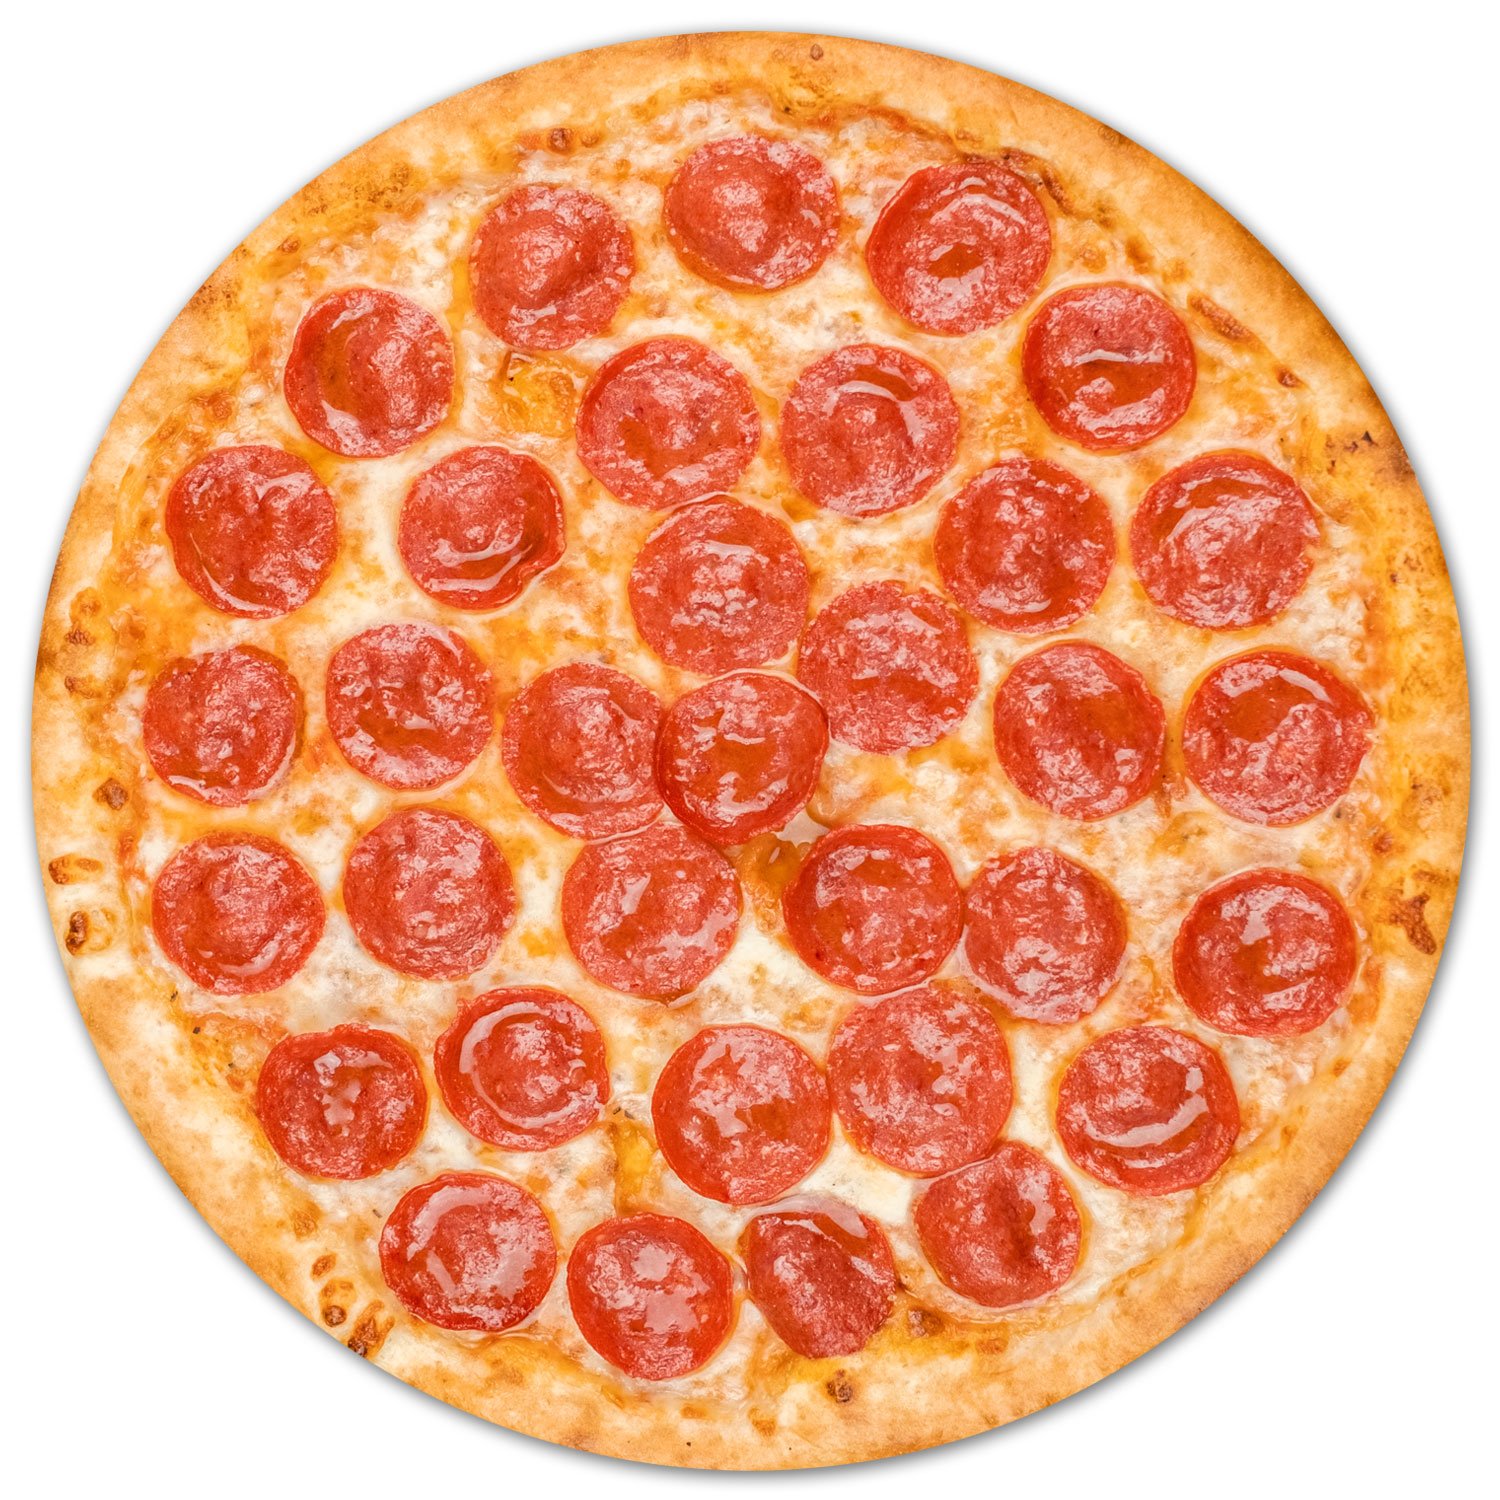 пепперони пицца фото на белом фоне фото 10